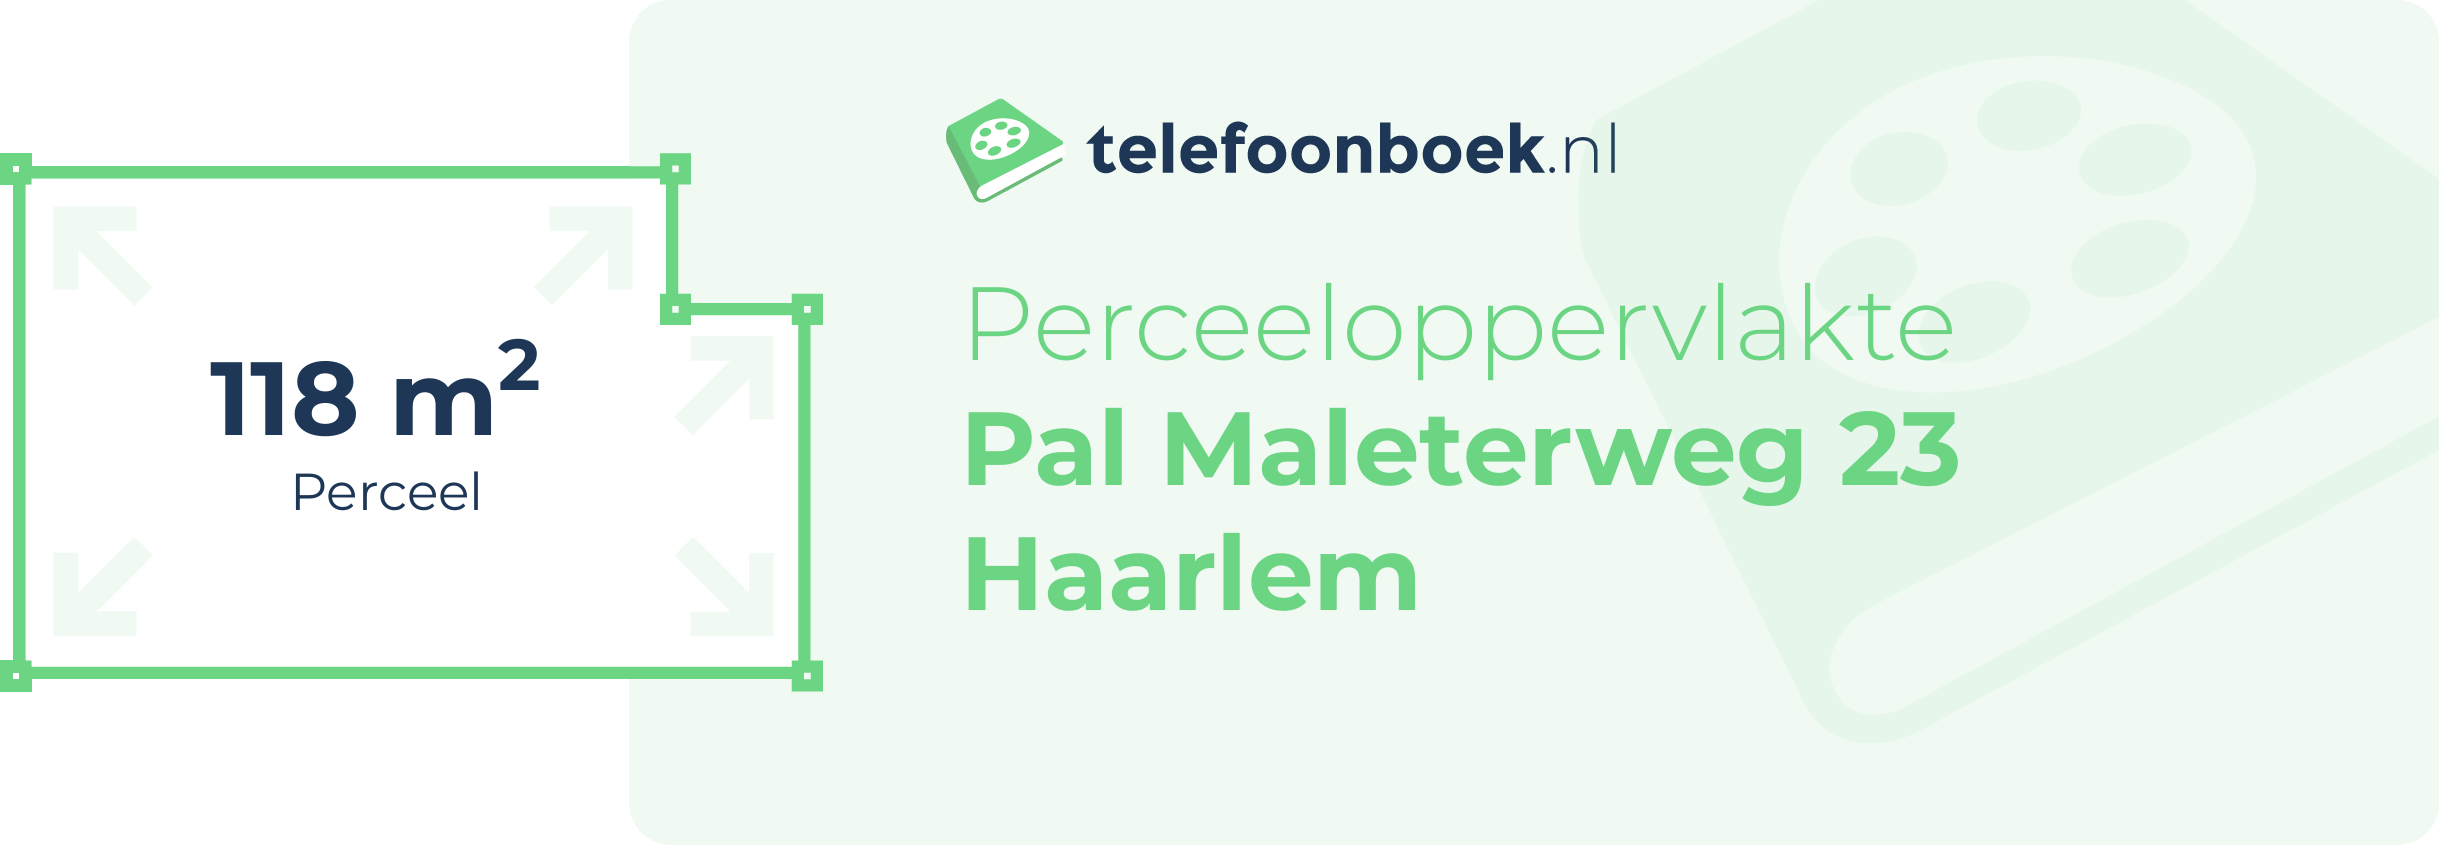 Perceeloppervlakte Pal Maleterweg 23 Haarlem